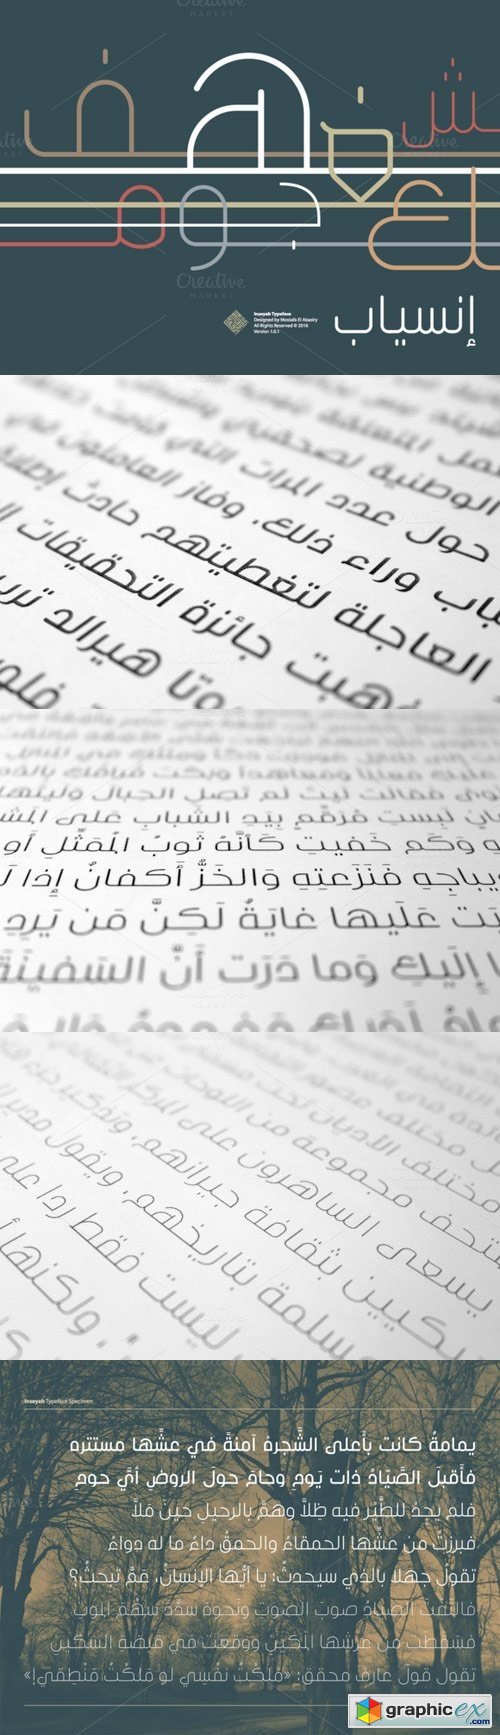 Arabic Typeface, Inseyab